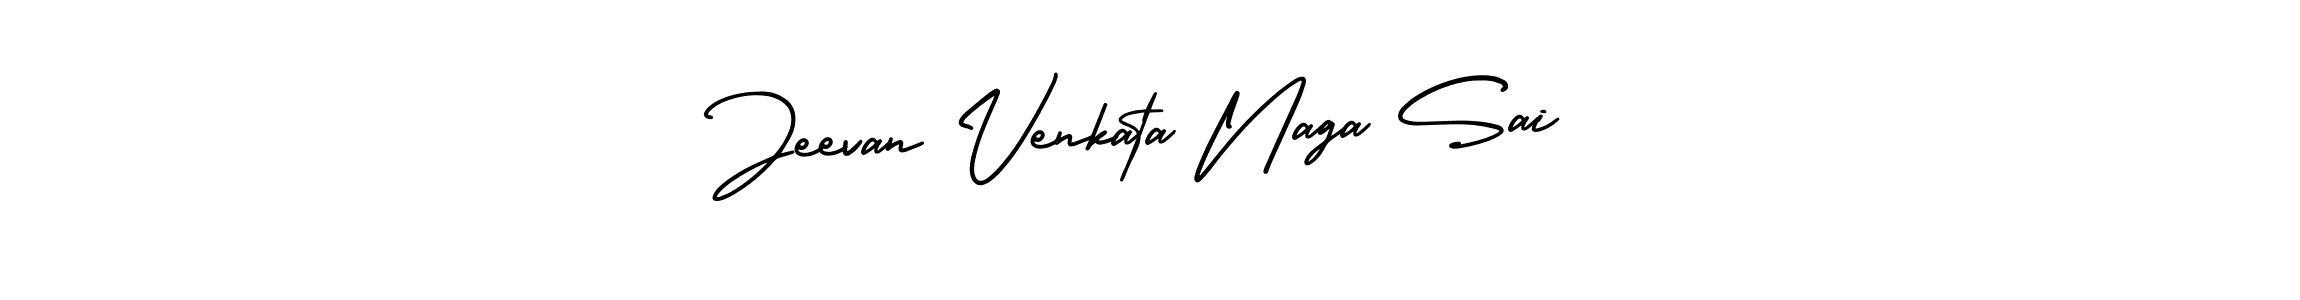 Best and Professional Signature Style for Jeevan Venkata Naga Sai. AmerikaSignatureDemo-Regular Best Signature Style Collection. Jeevan Venkata Naga Sai signature style 3 images and pictures png